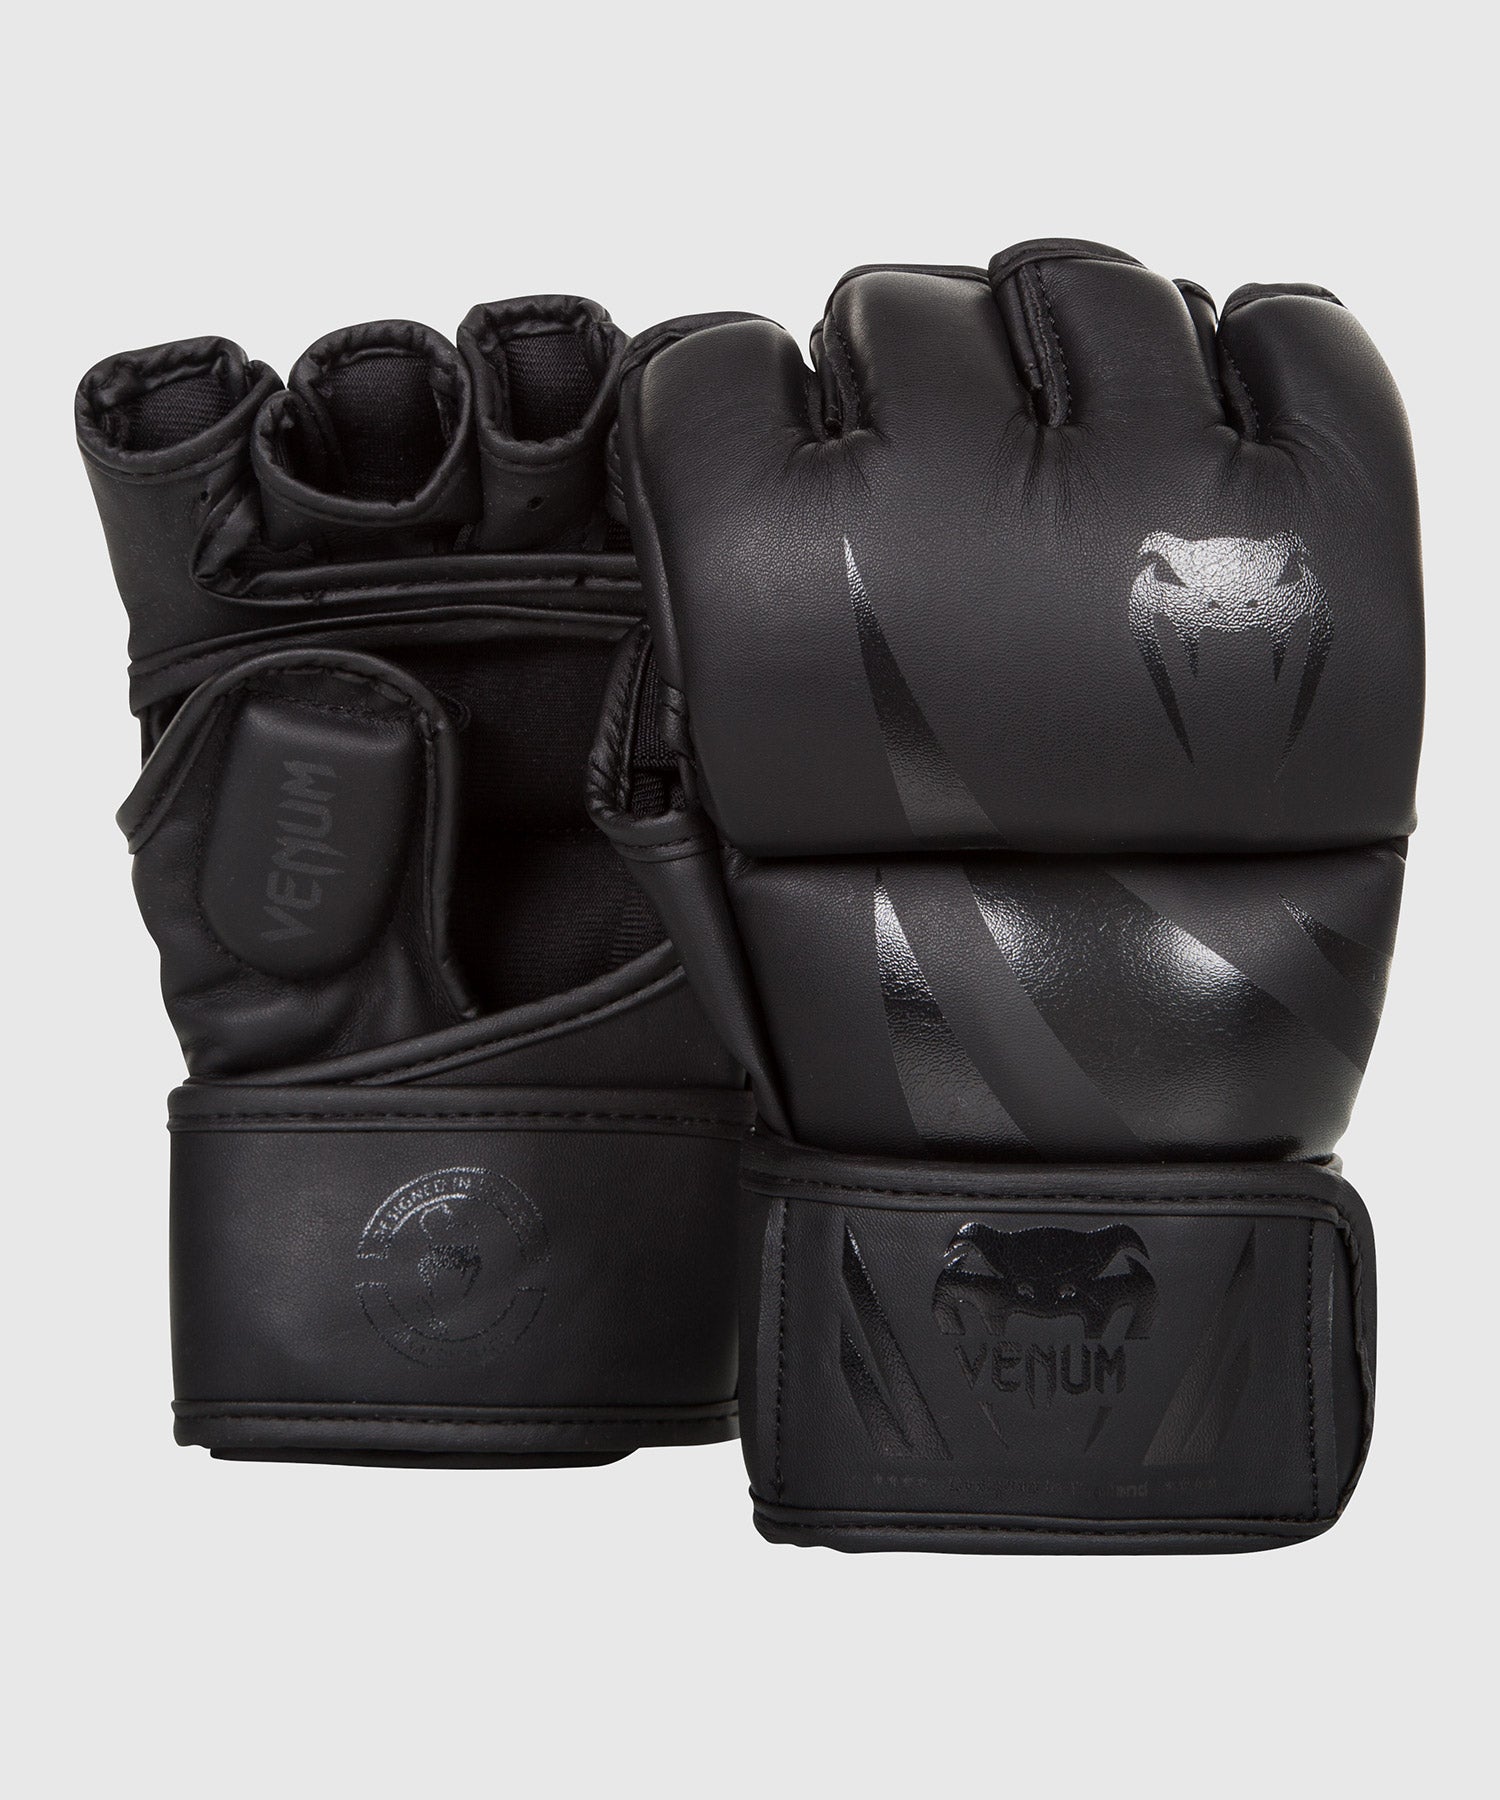 MMA / Sparring Gloves